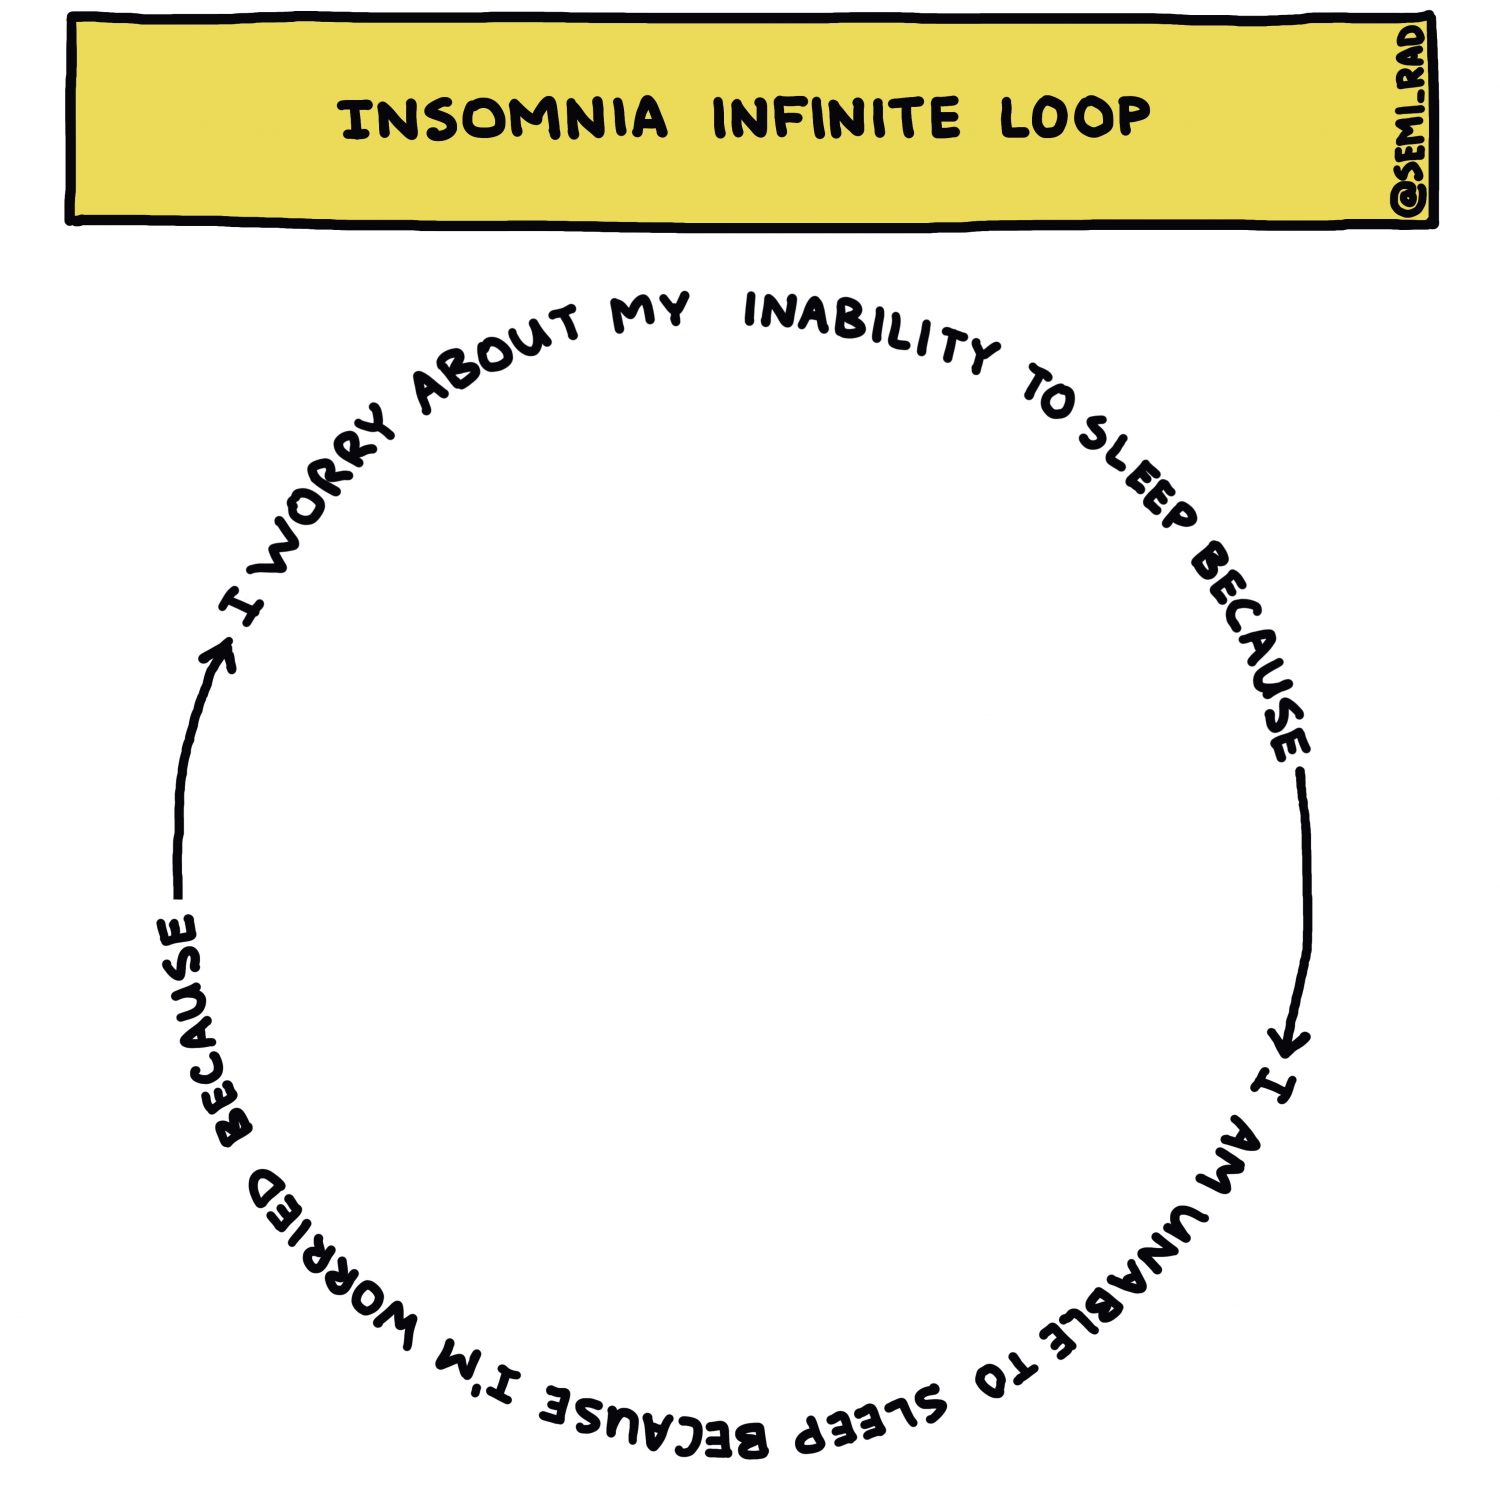 semi-rad chart: Insomnia Infinite Loop